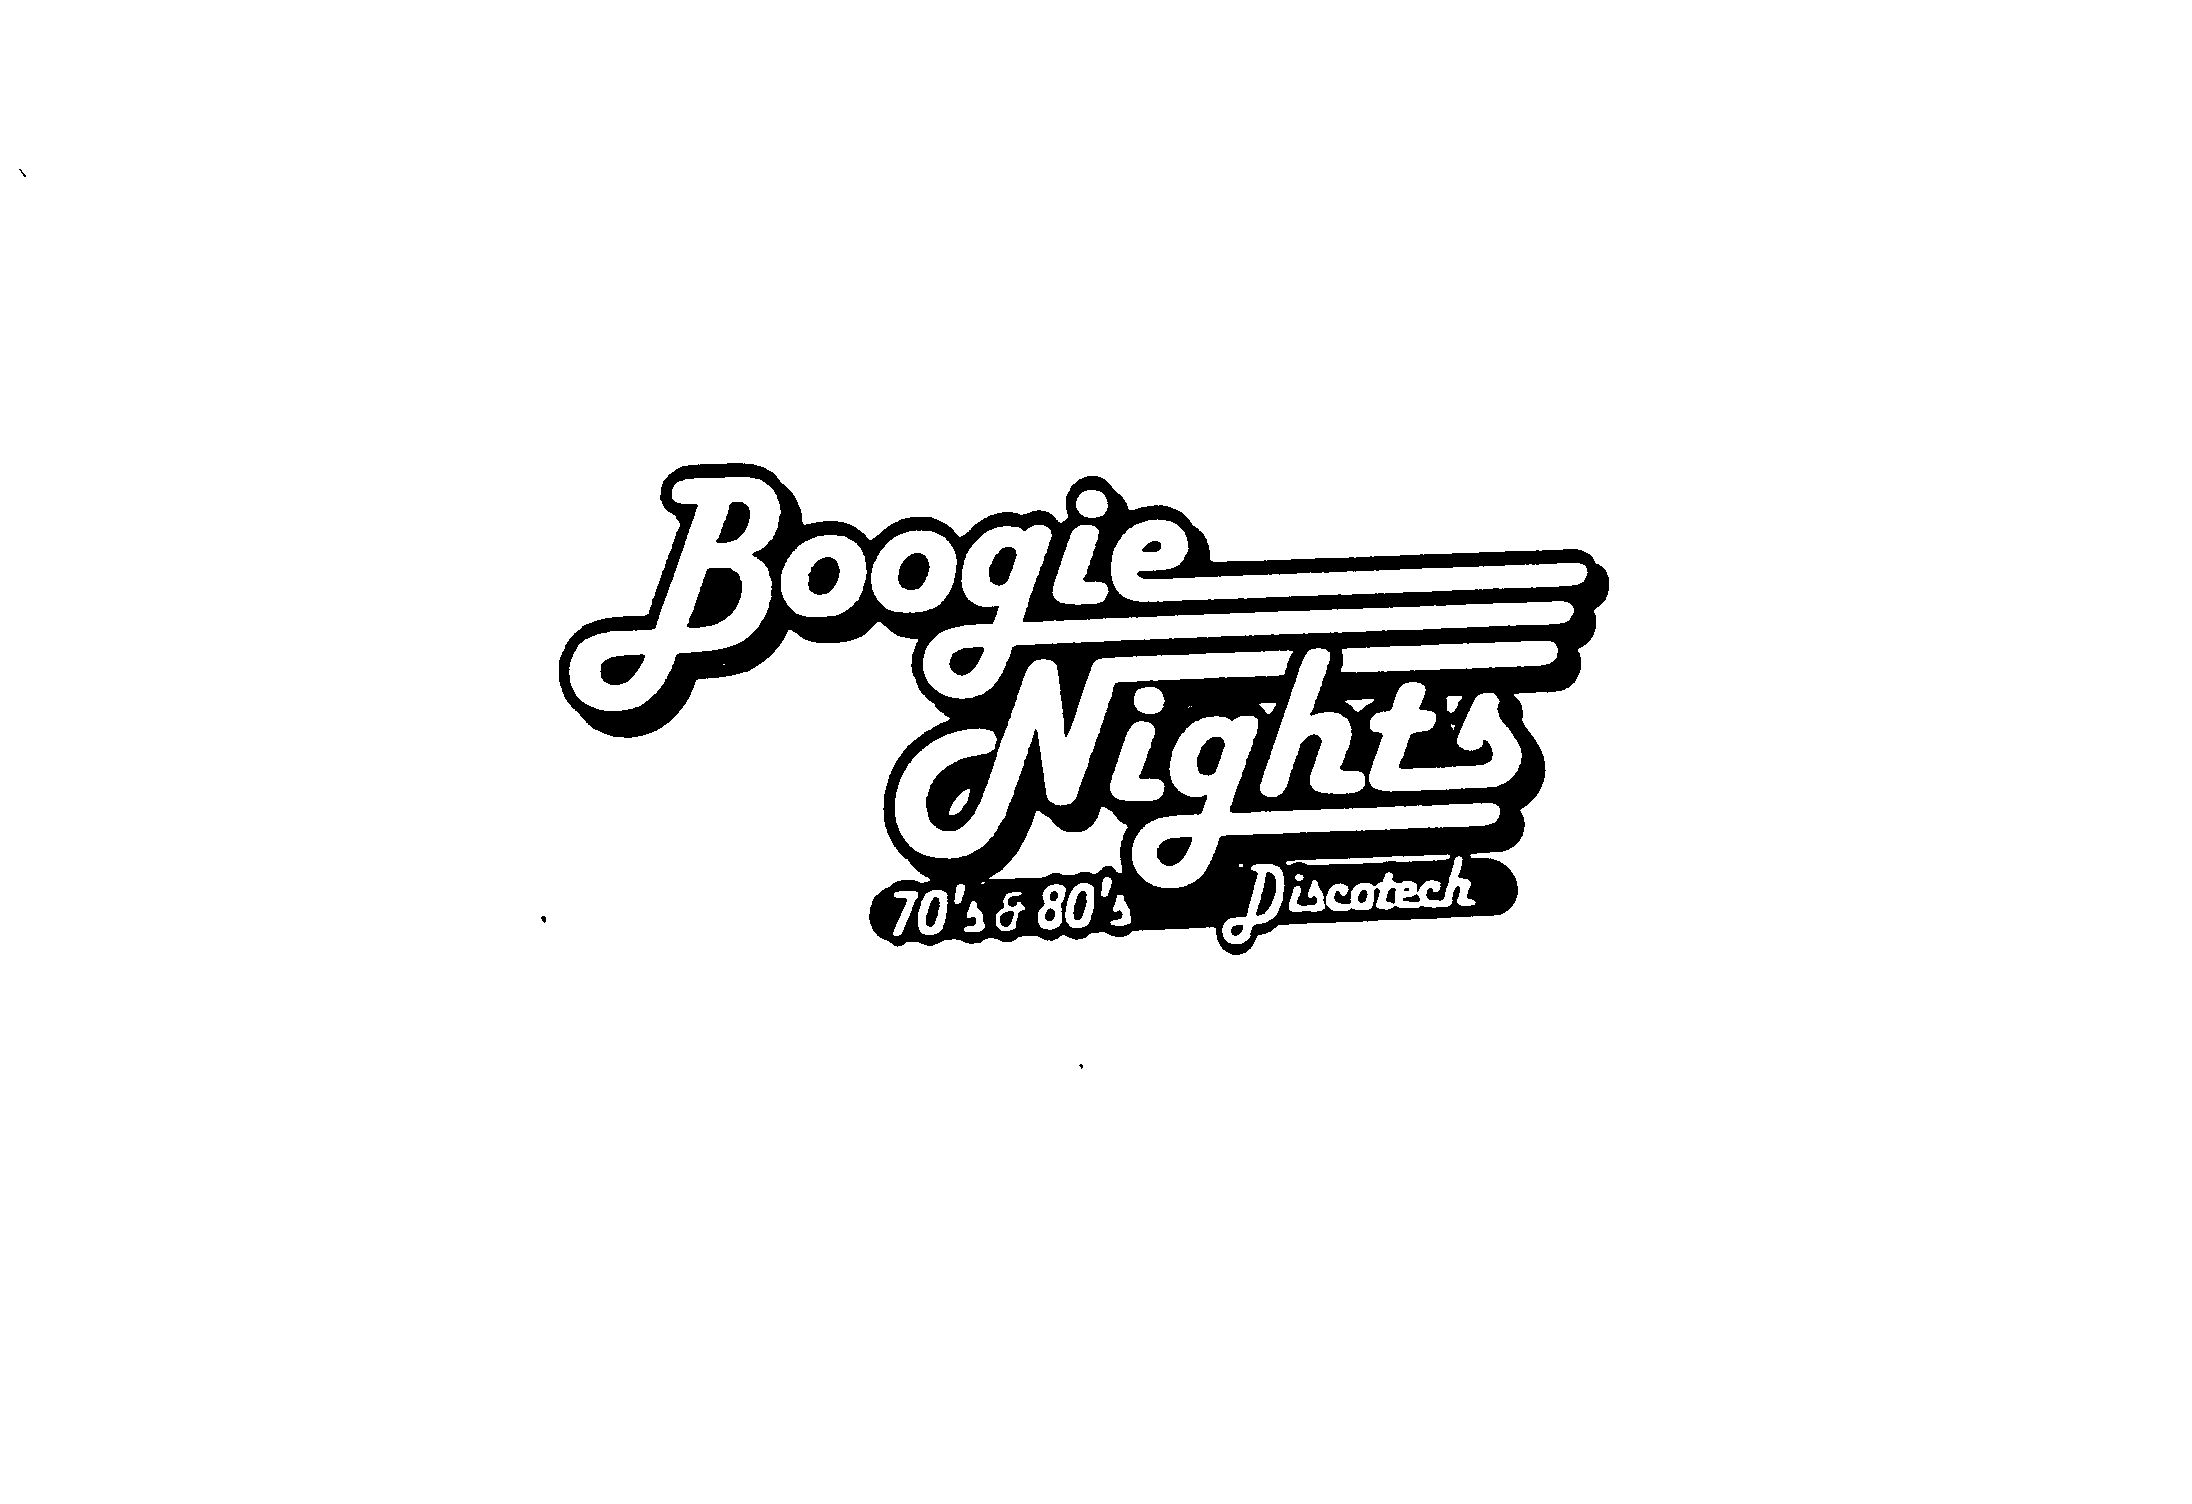  BOOGIE NIGHTS 70'S &amp; 80'S DISCOTECH